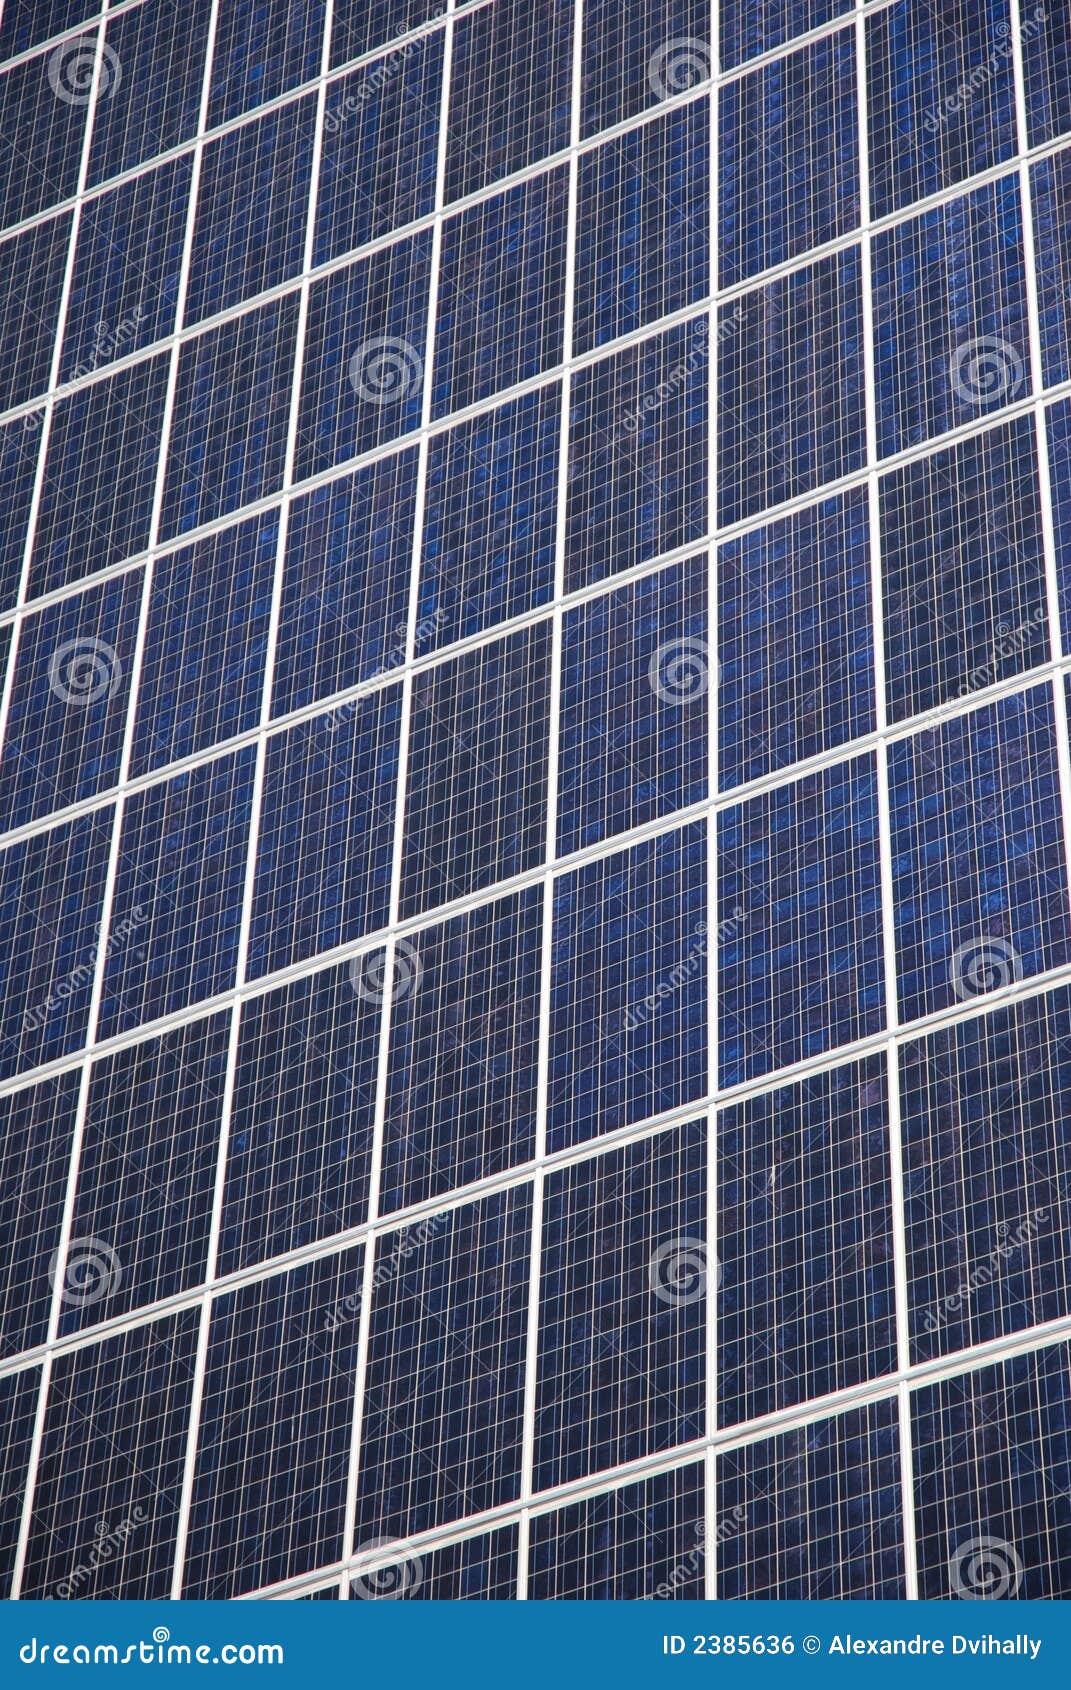 solar panels - energysaving